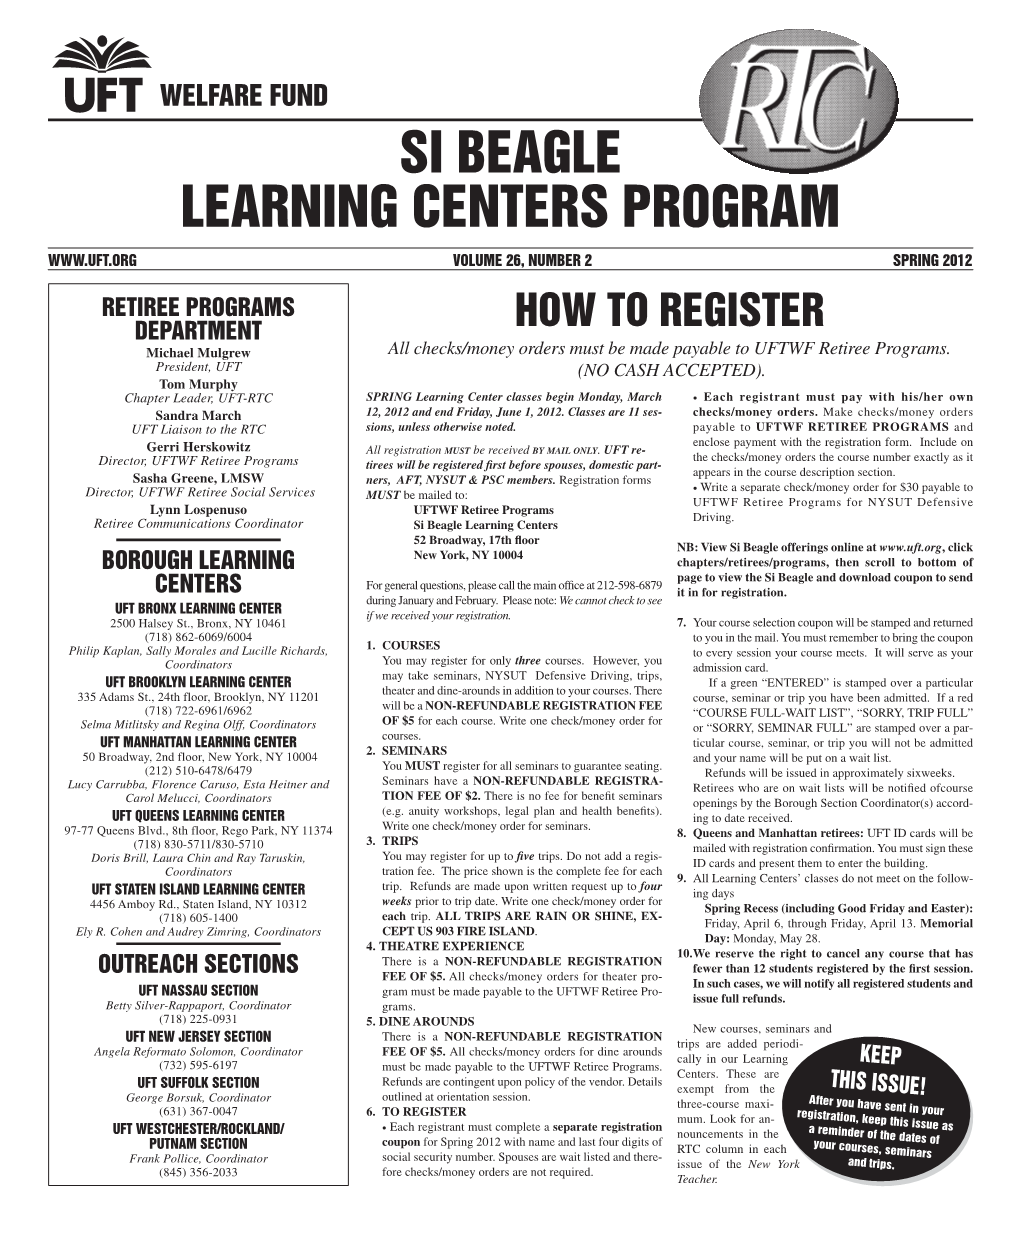 Si Beagle Learning Centers Program